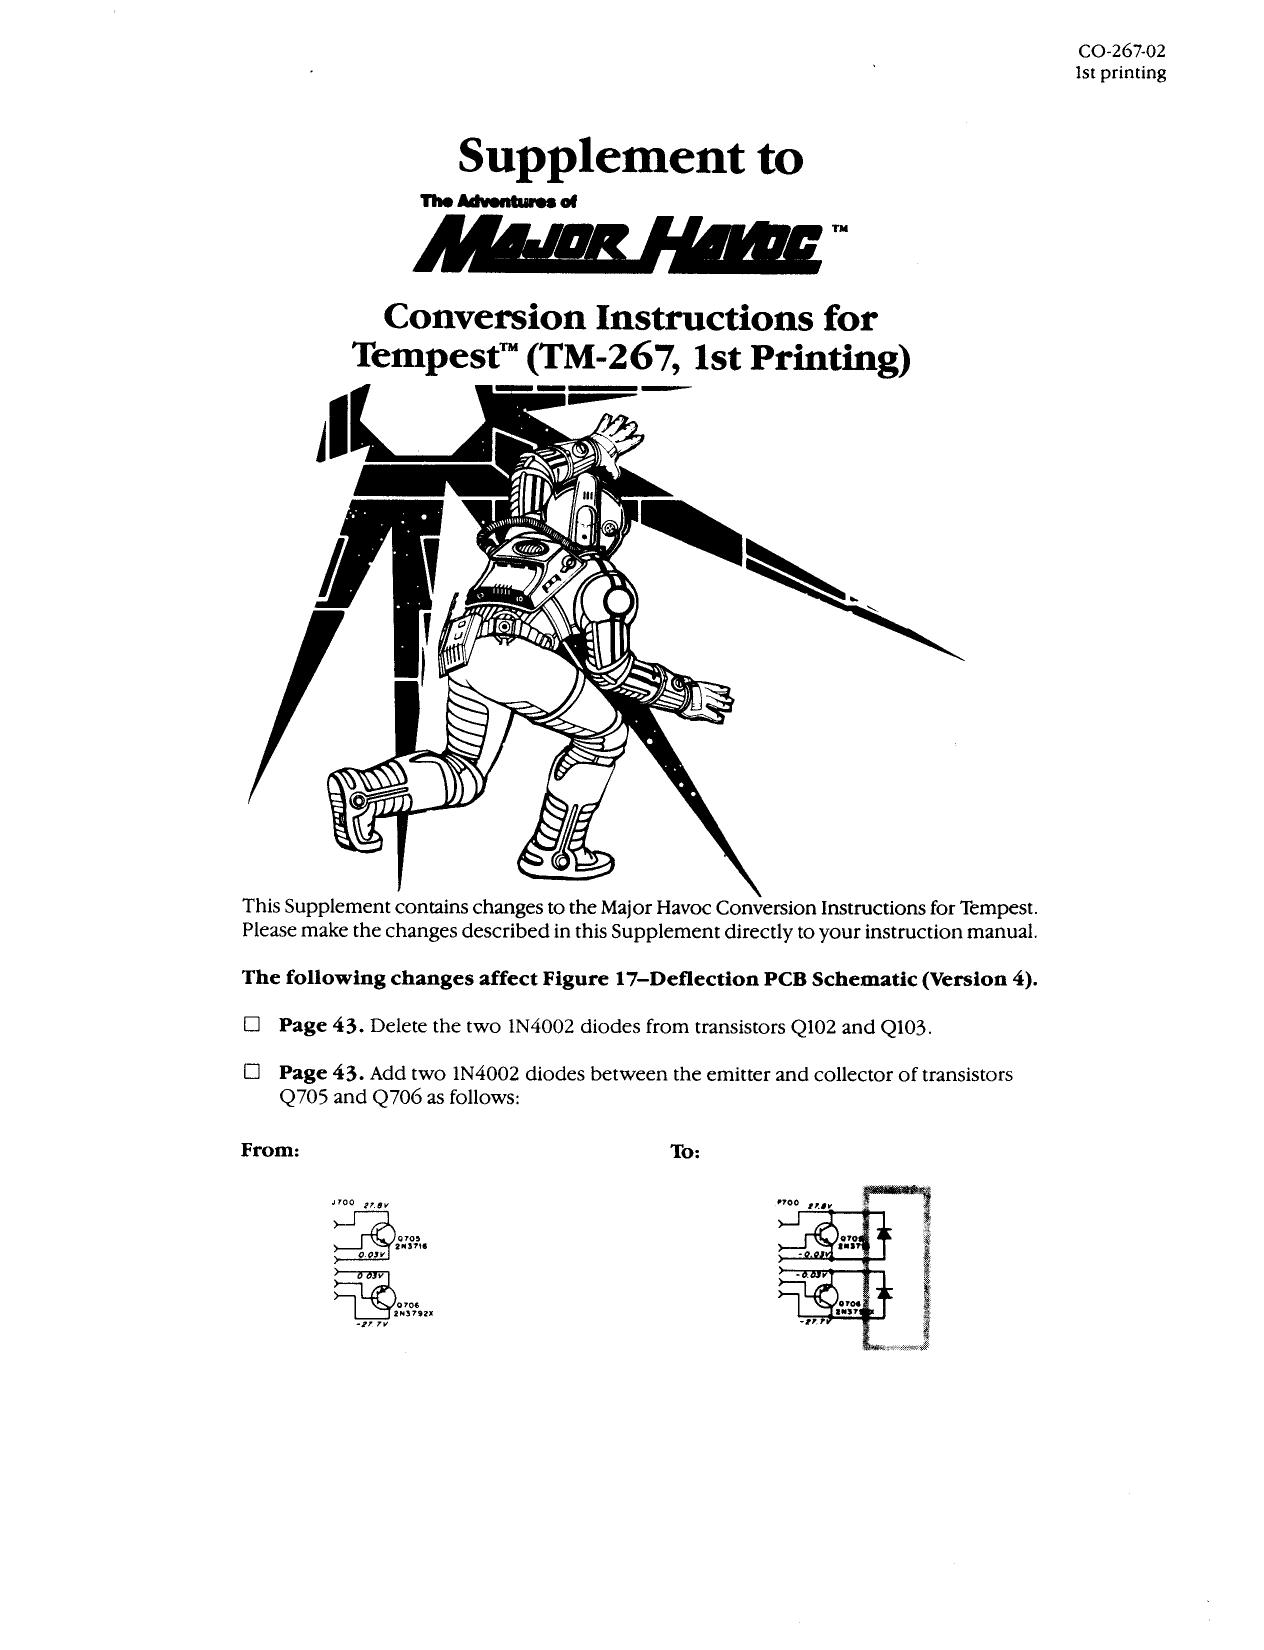 Major Havoc CO-267-02 1st Printing